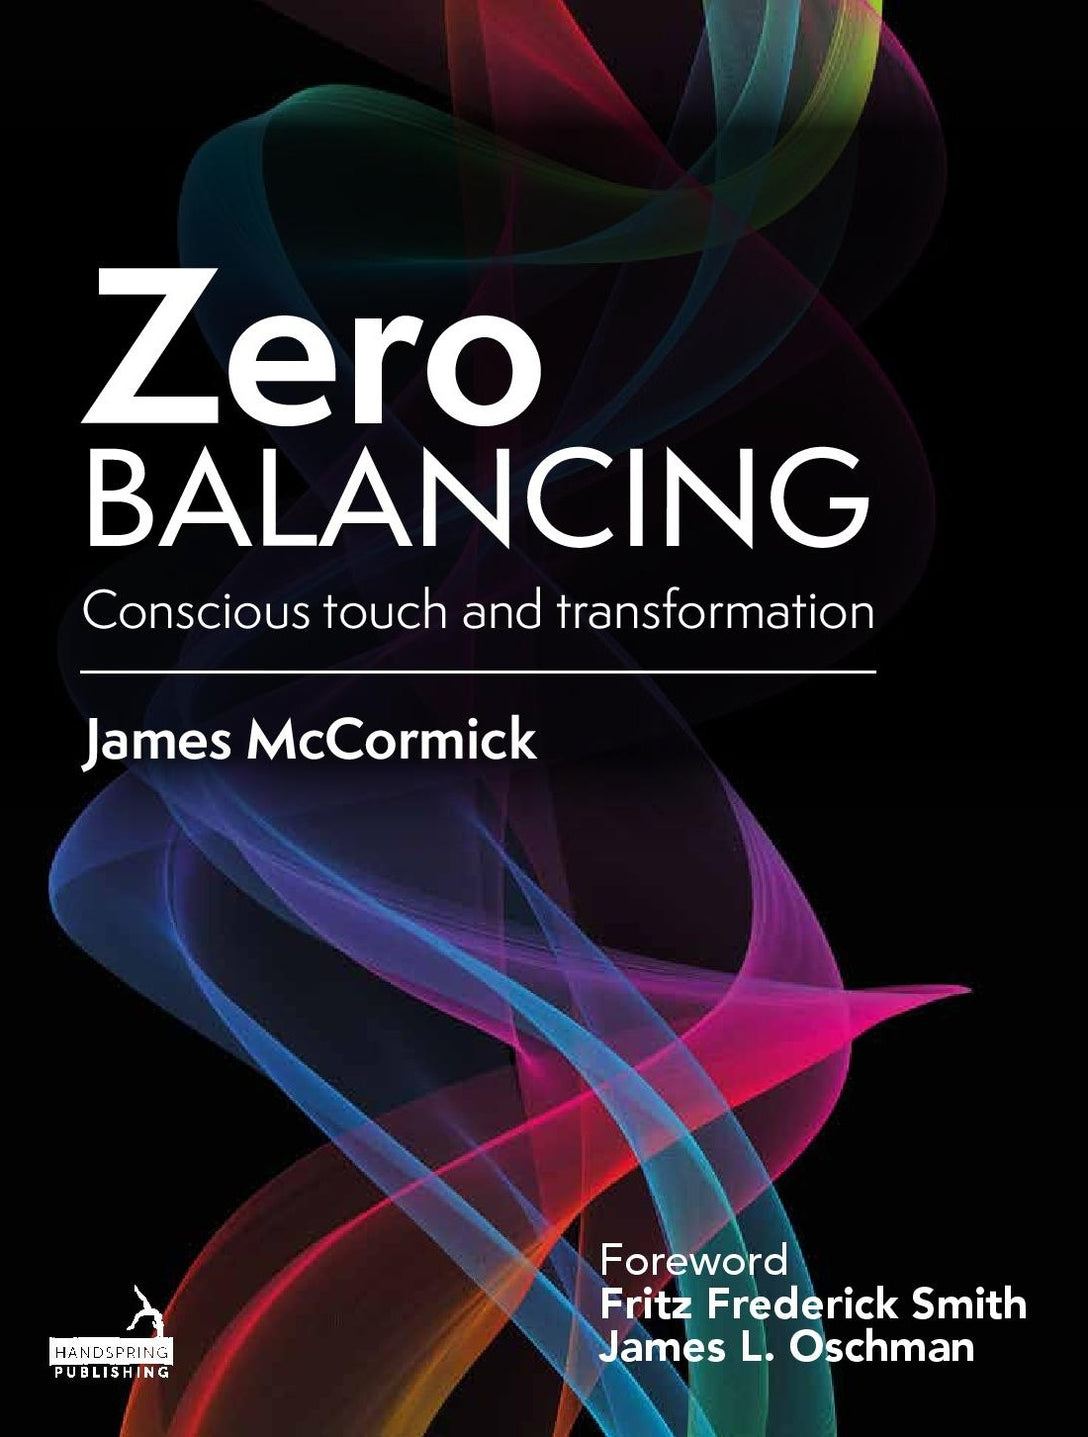 Zero Balancing by Jim McCormick